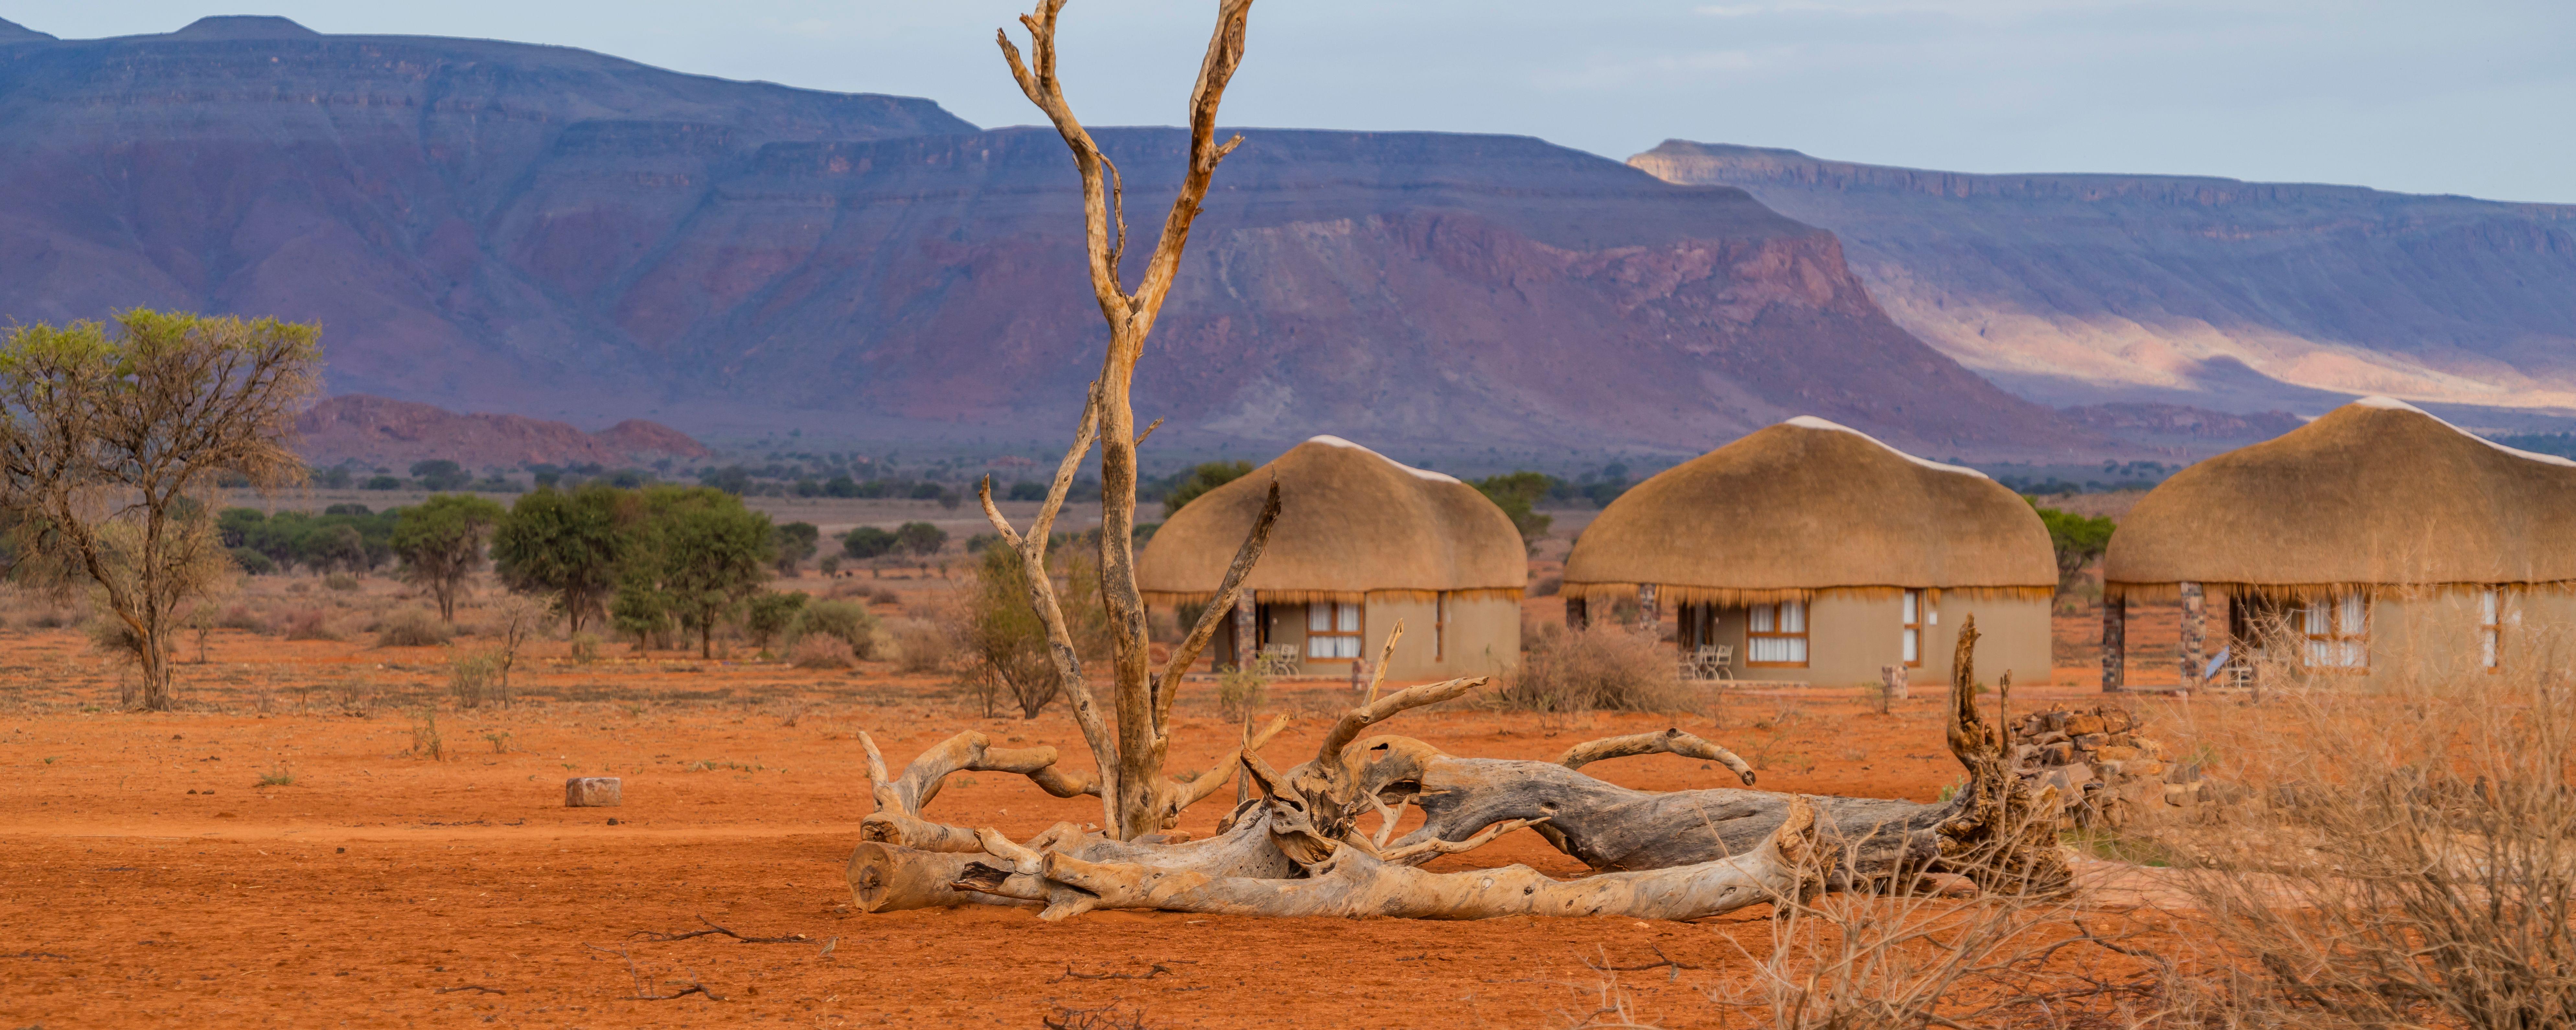 Namibia Safari Lodges